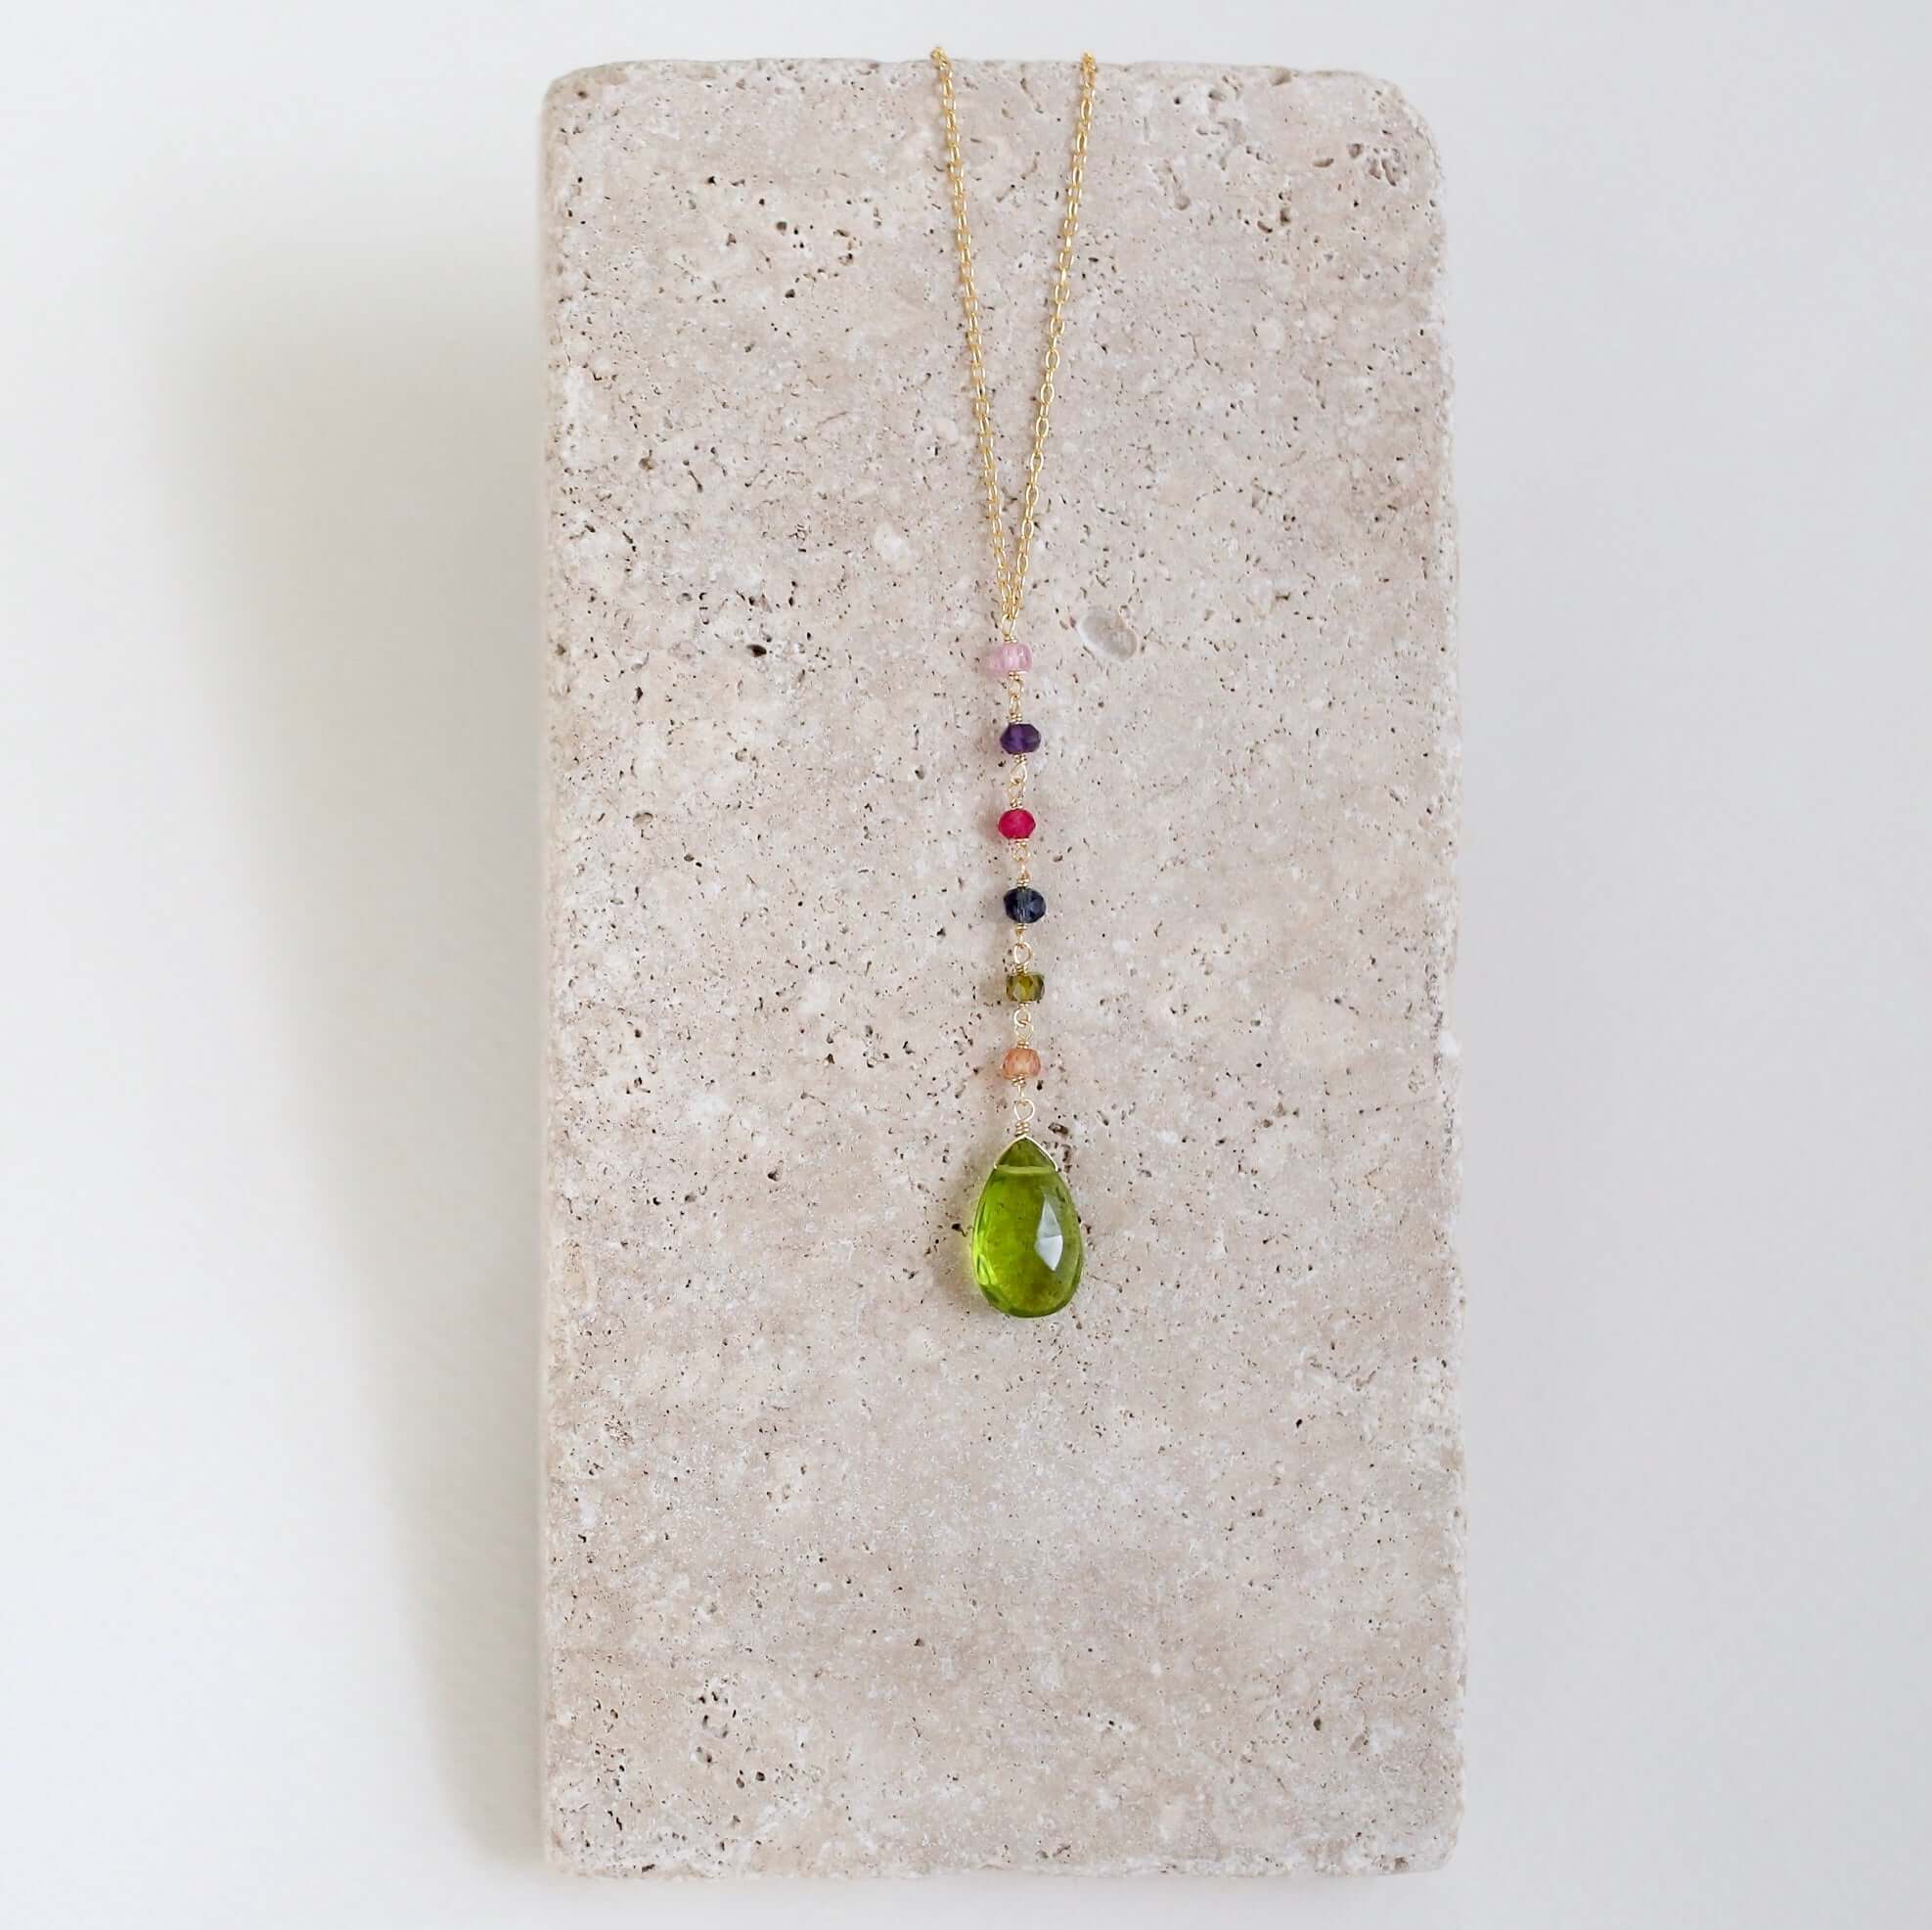 Gold Yoga pendant with Peridot Green quartz gemstones, multi-color accent stones Necklace